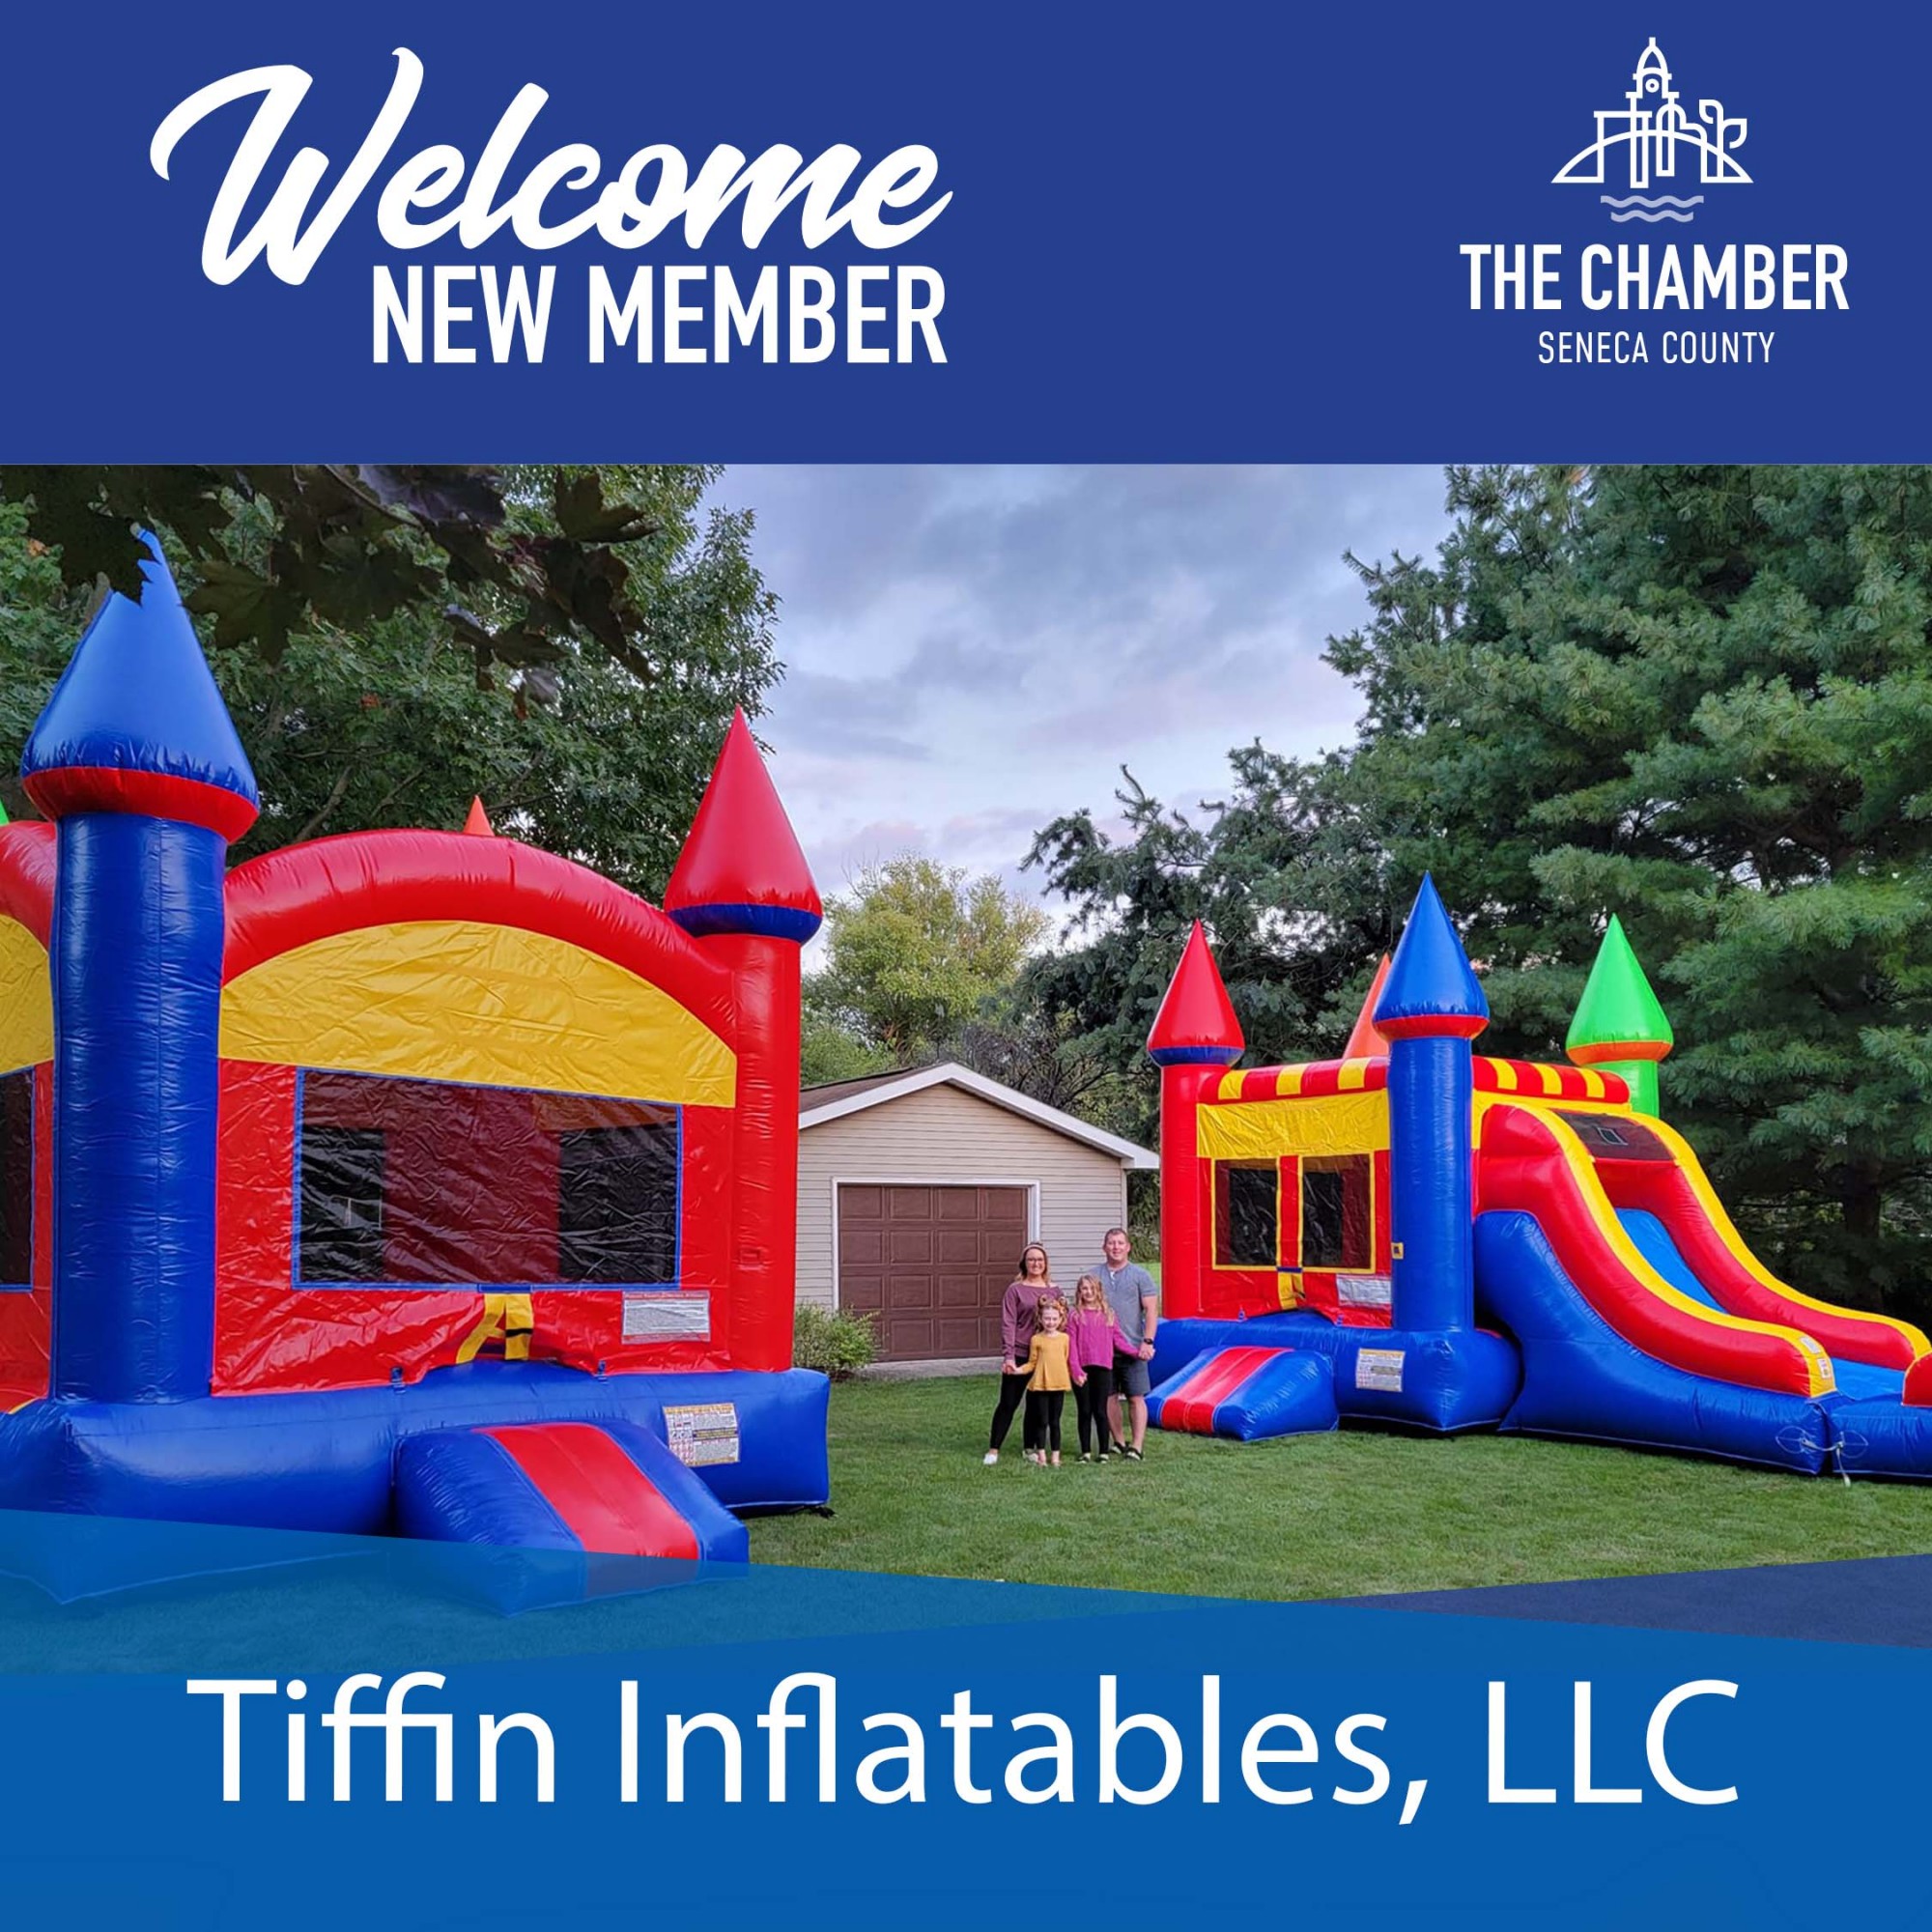 New Member: Tiffin Inflatables, LLC